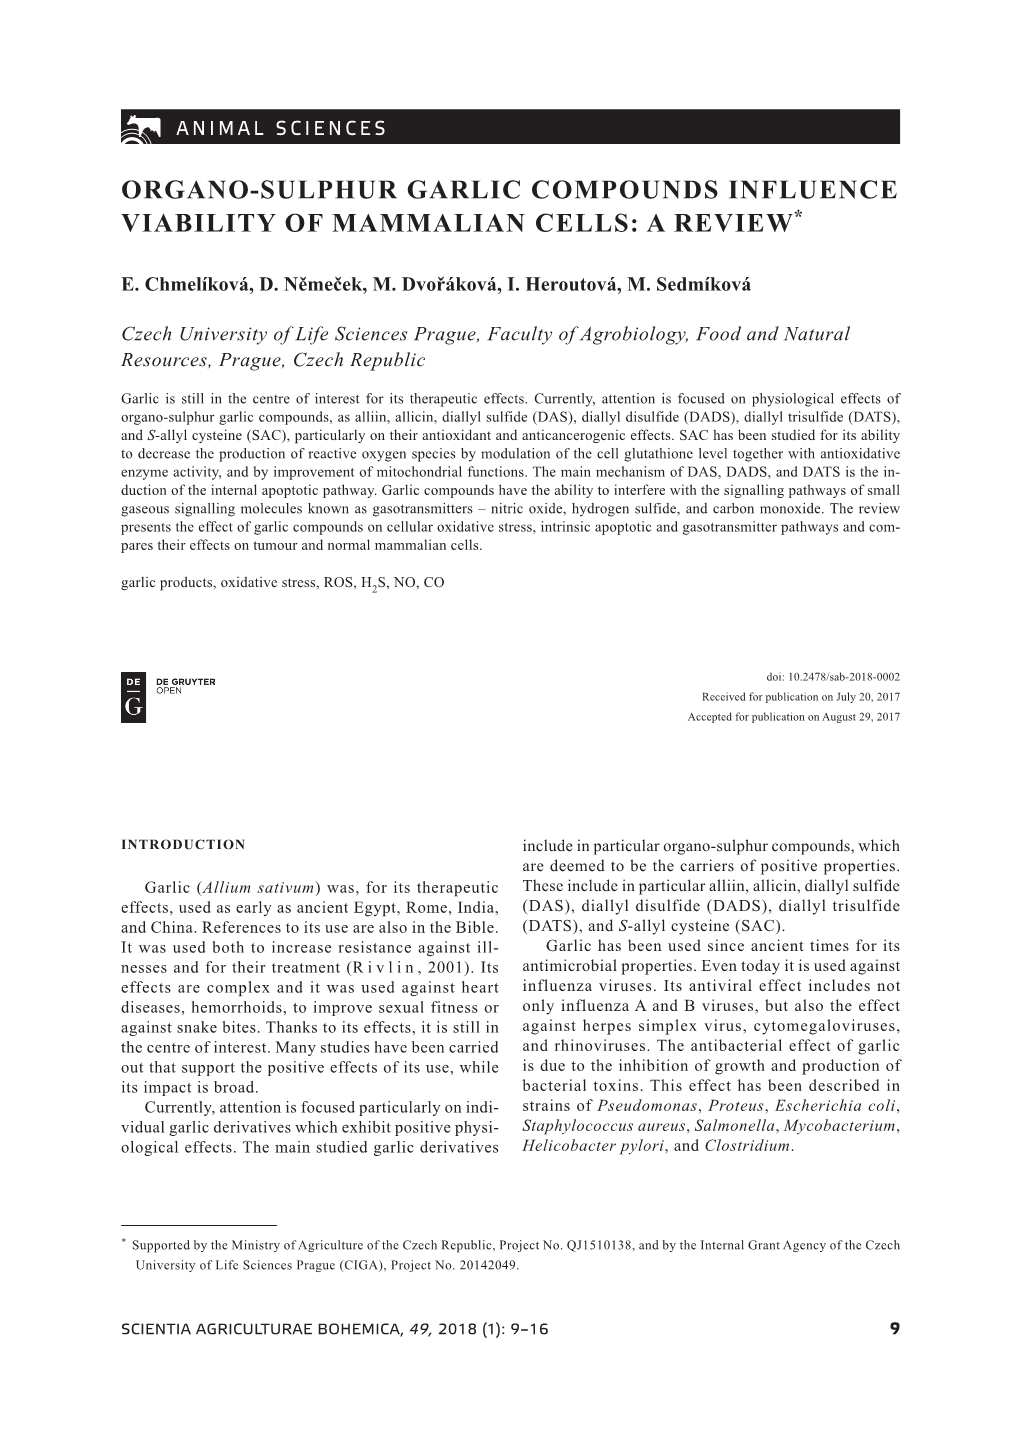 Organo-Sulphur Garlic Compounds Influence Viability of Mammalian Cells: a Review*